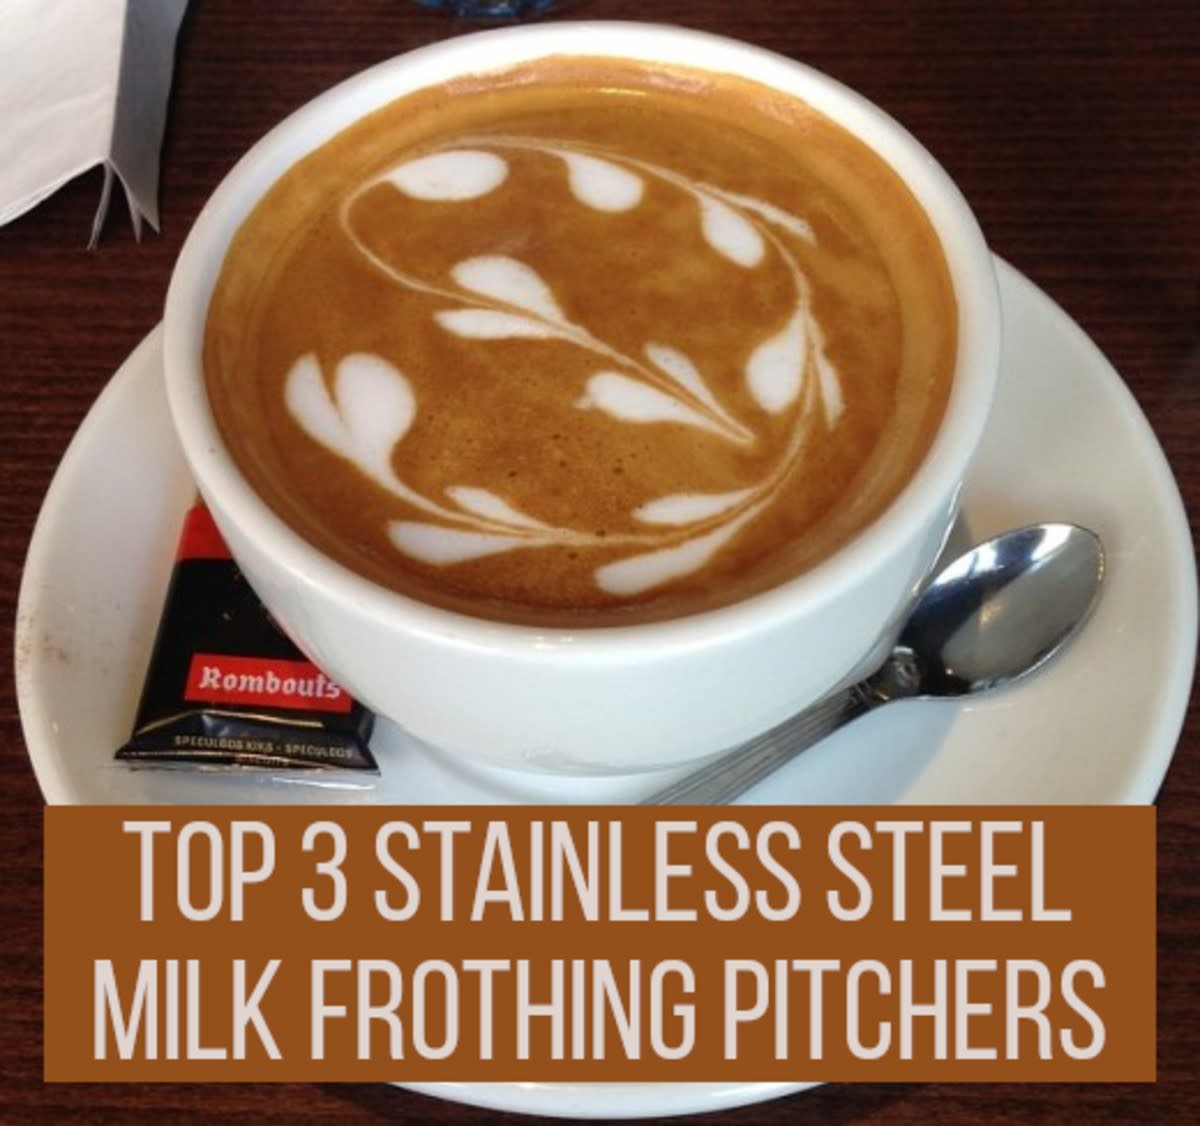 https://images.saymedia-content.com/.image/t_share/MjAxNTM3NjY3NjMwOTAwODU3/best-milk-frothing-pitcher-2015-top-5.jpg